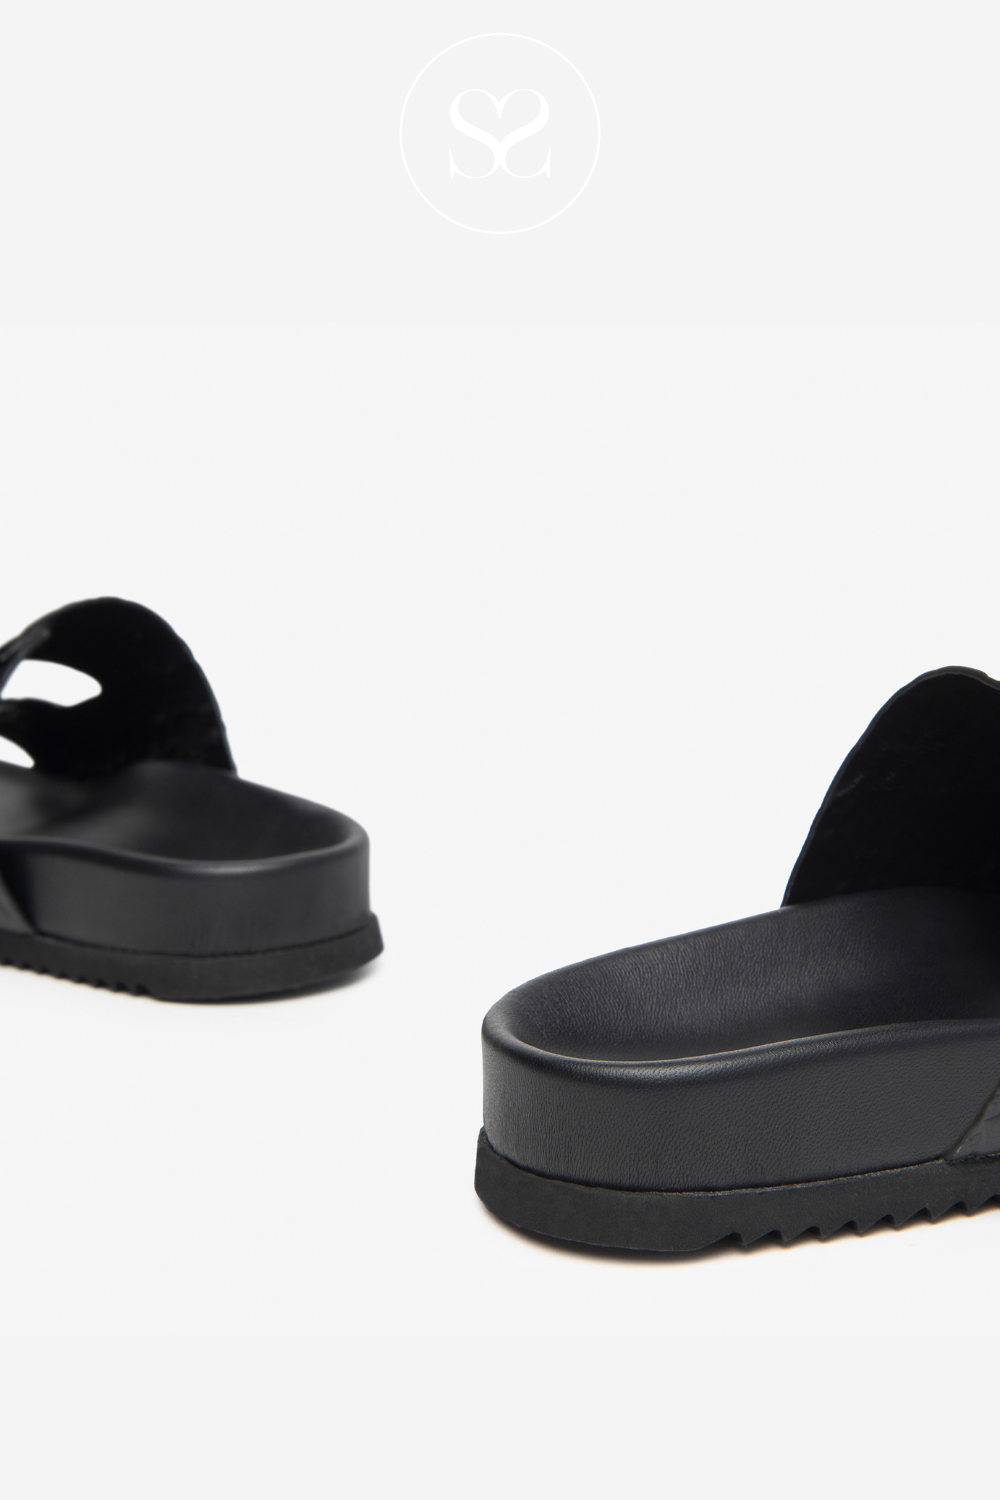 black slider sandals from Nero Giardini Ireland